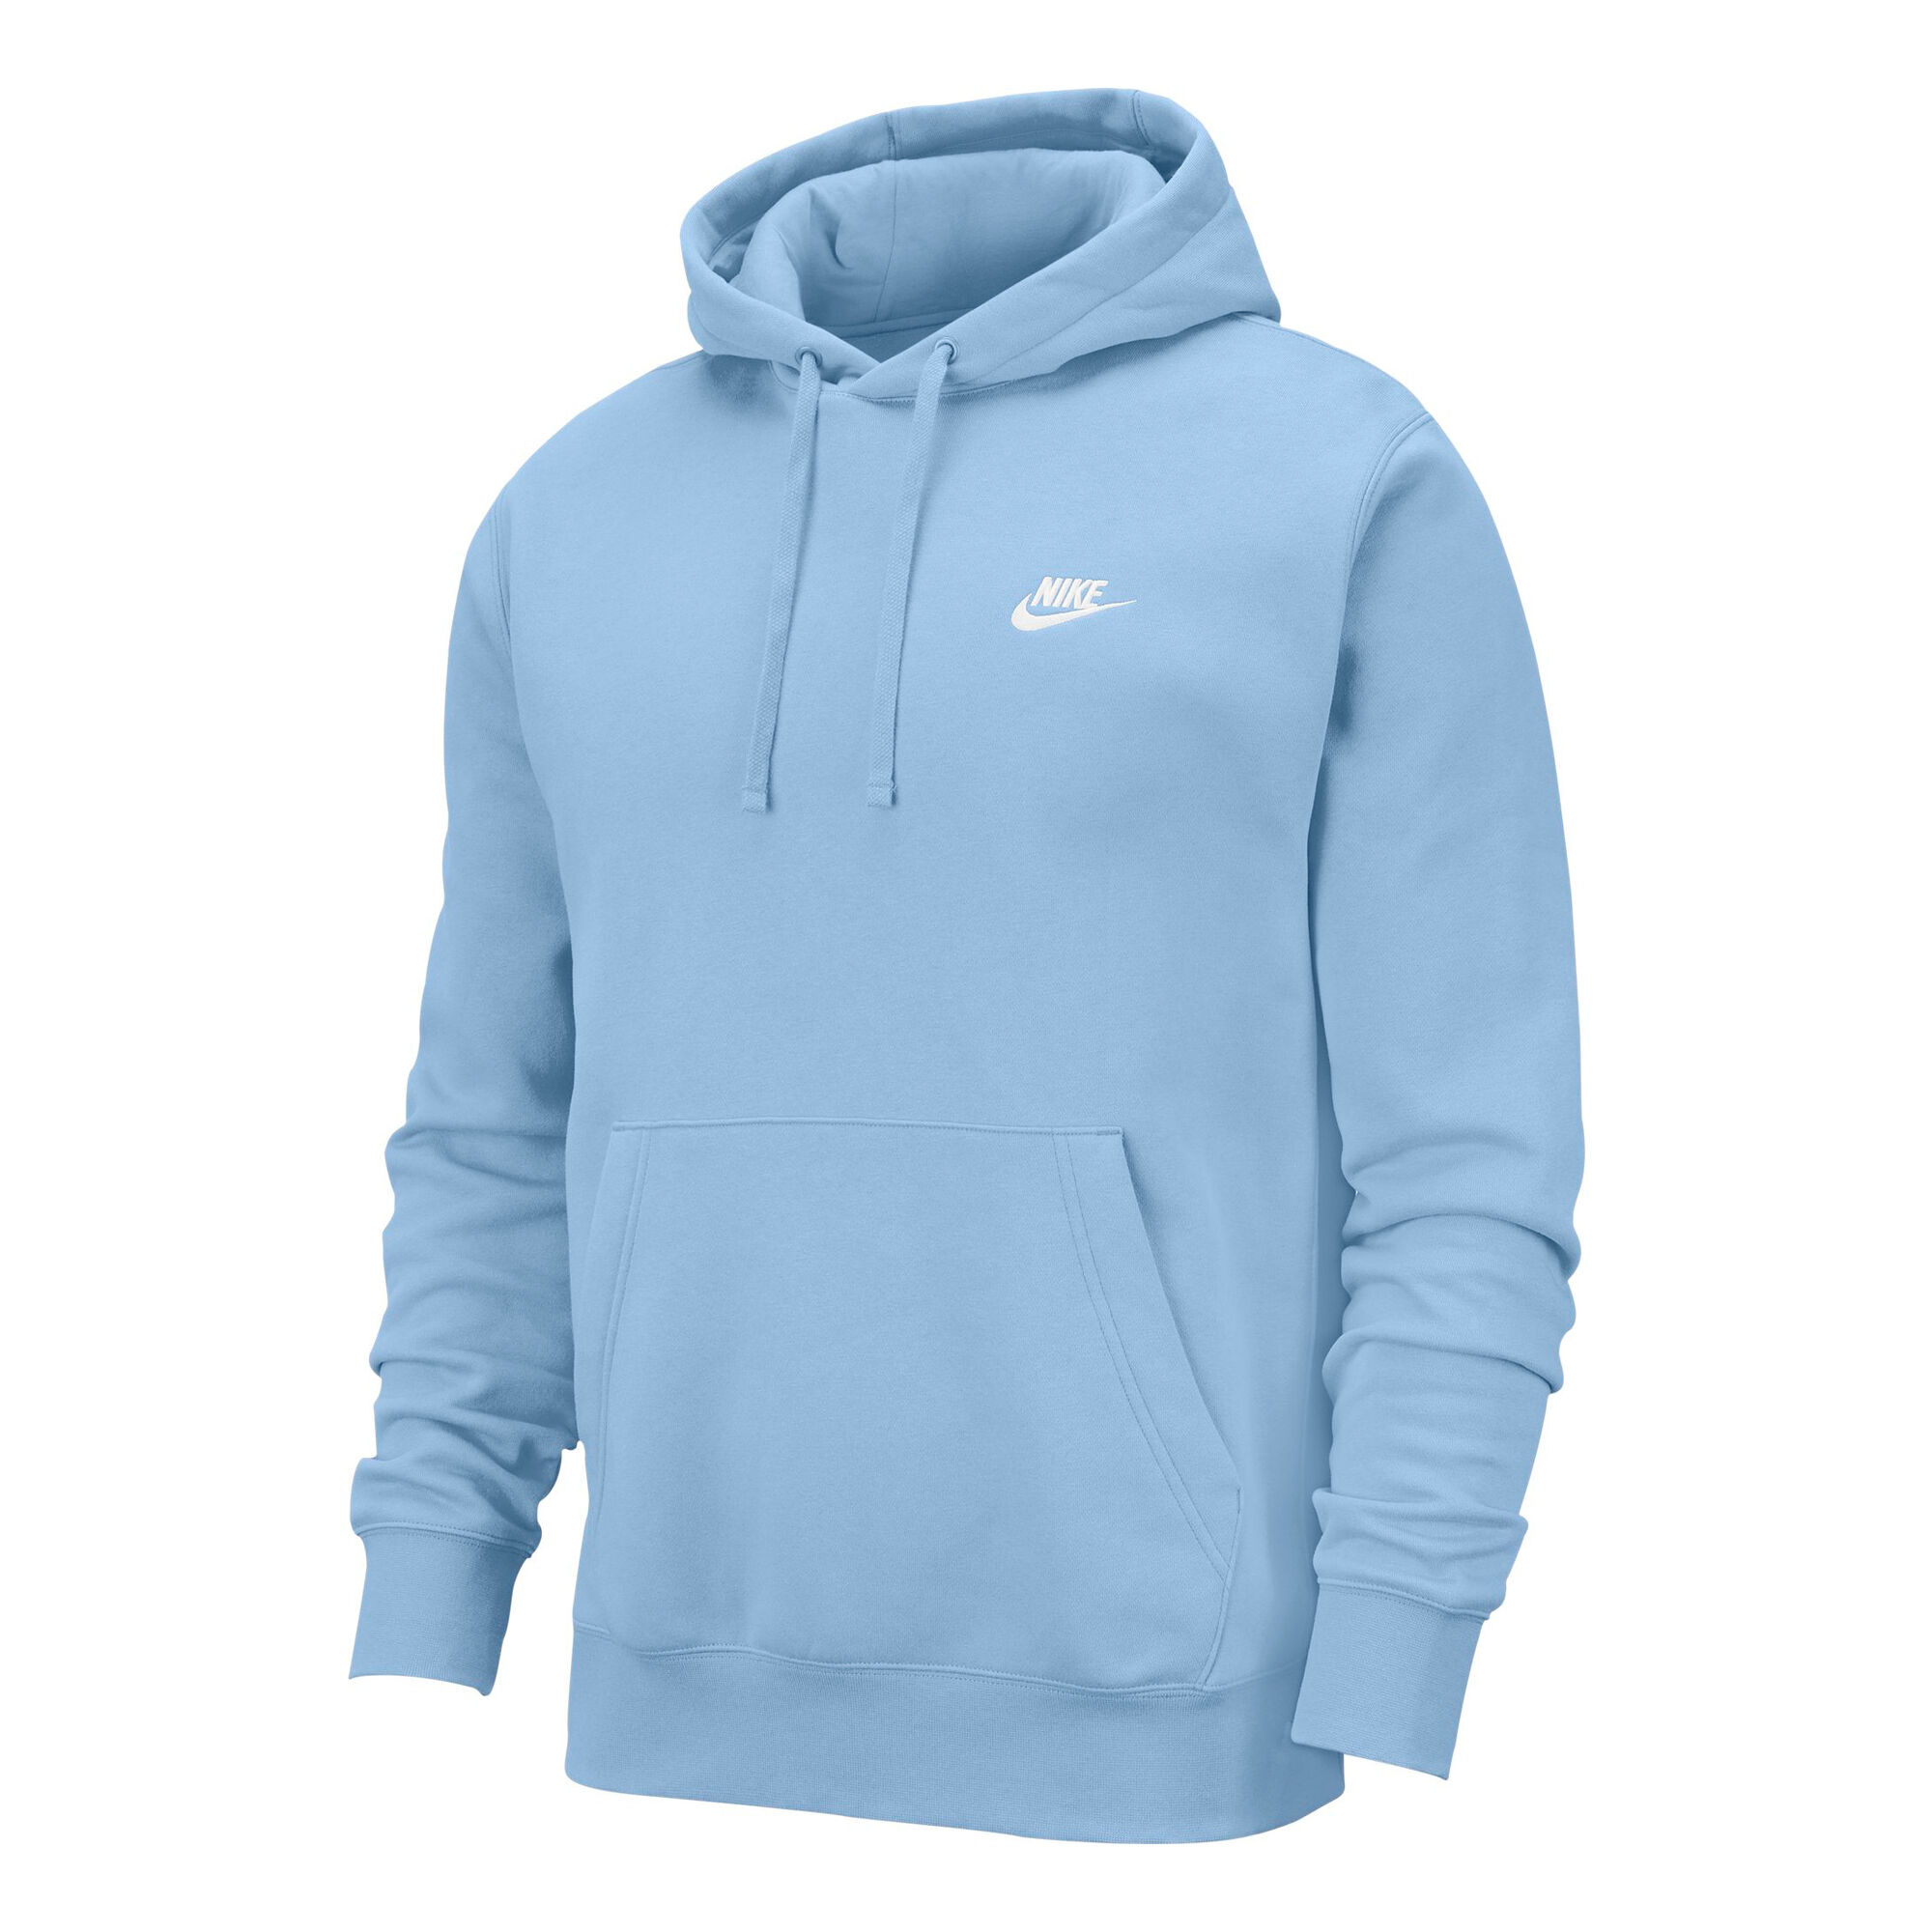 Nike - Club - Sweat à capuche - Blanc voile et bleu